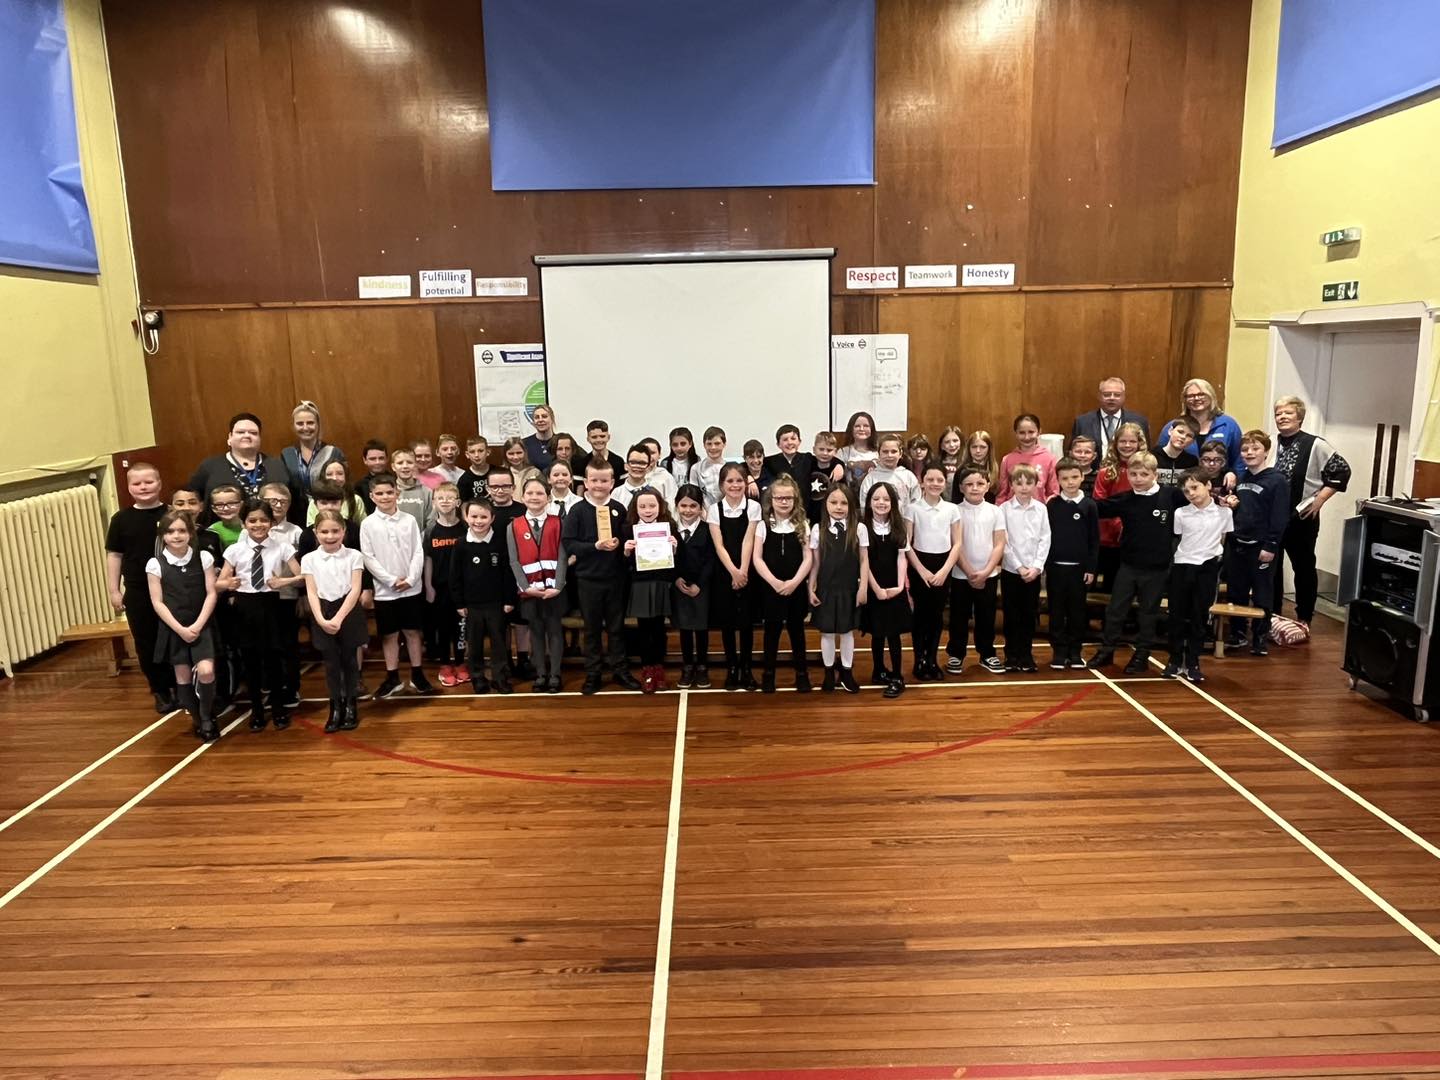 Crossgates Primary School win inaugural Litter League | Fife Council